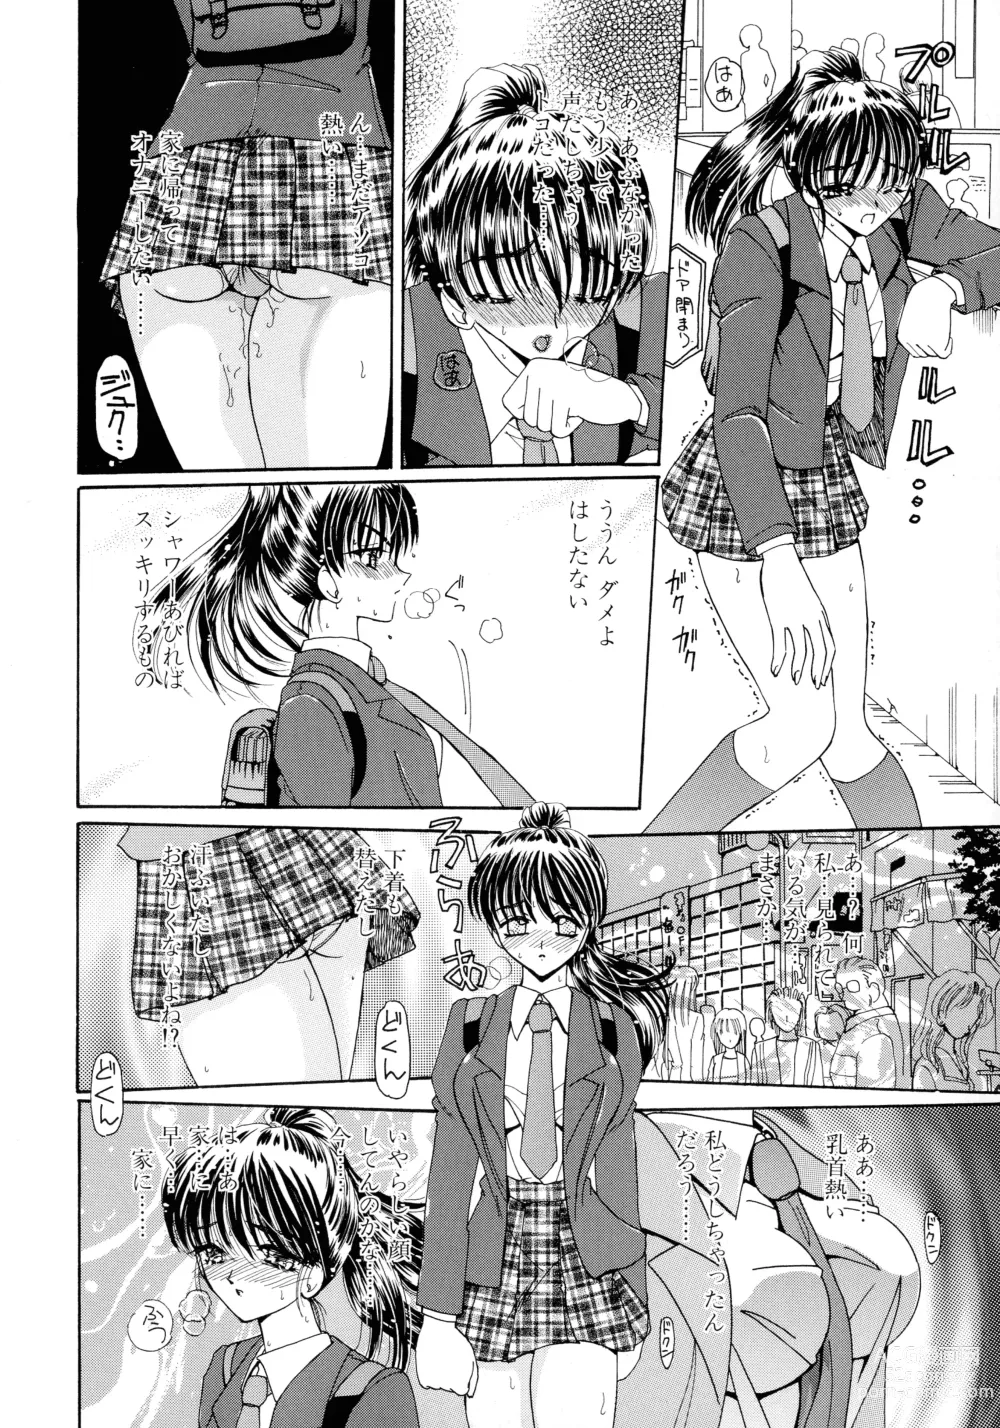 Page 148 of manga Mahou Trouble